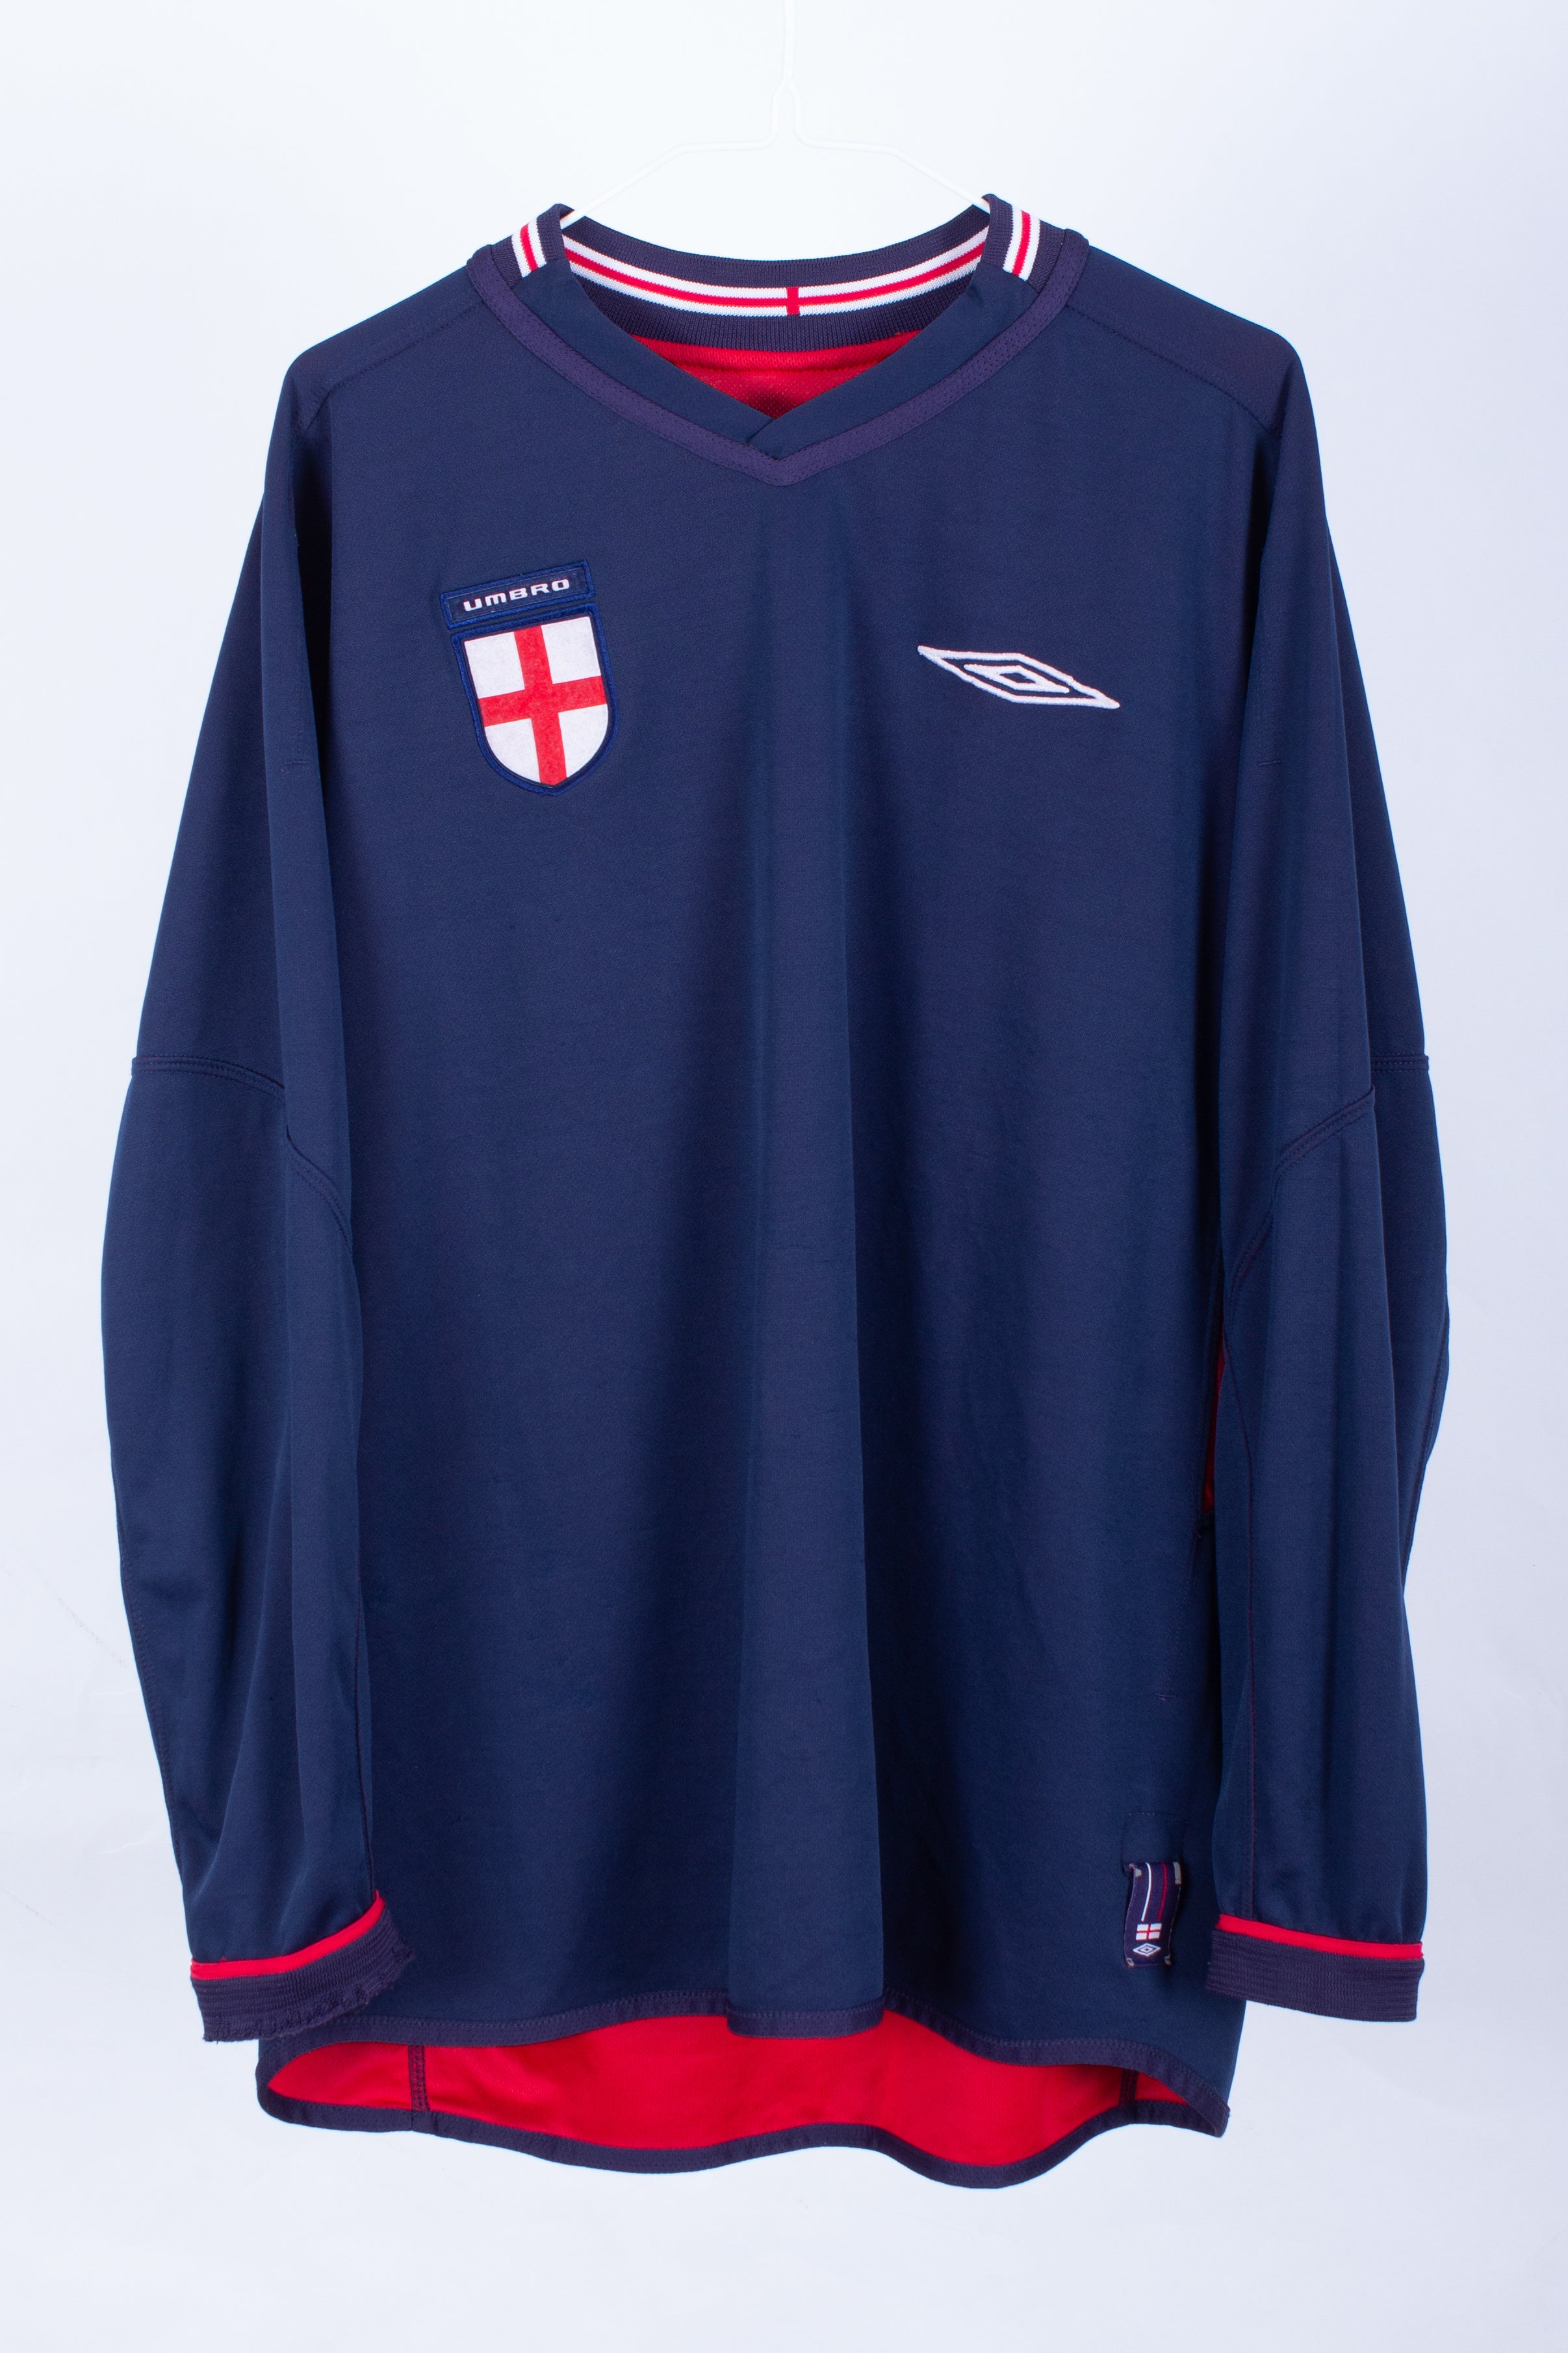 England 2002 Away Shirt L/S (L)